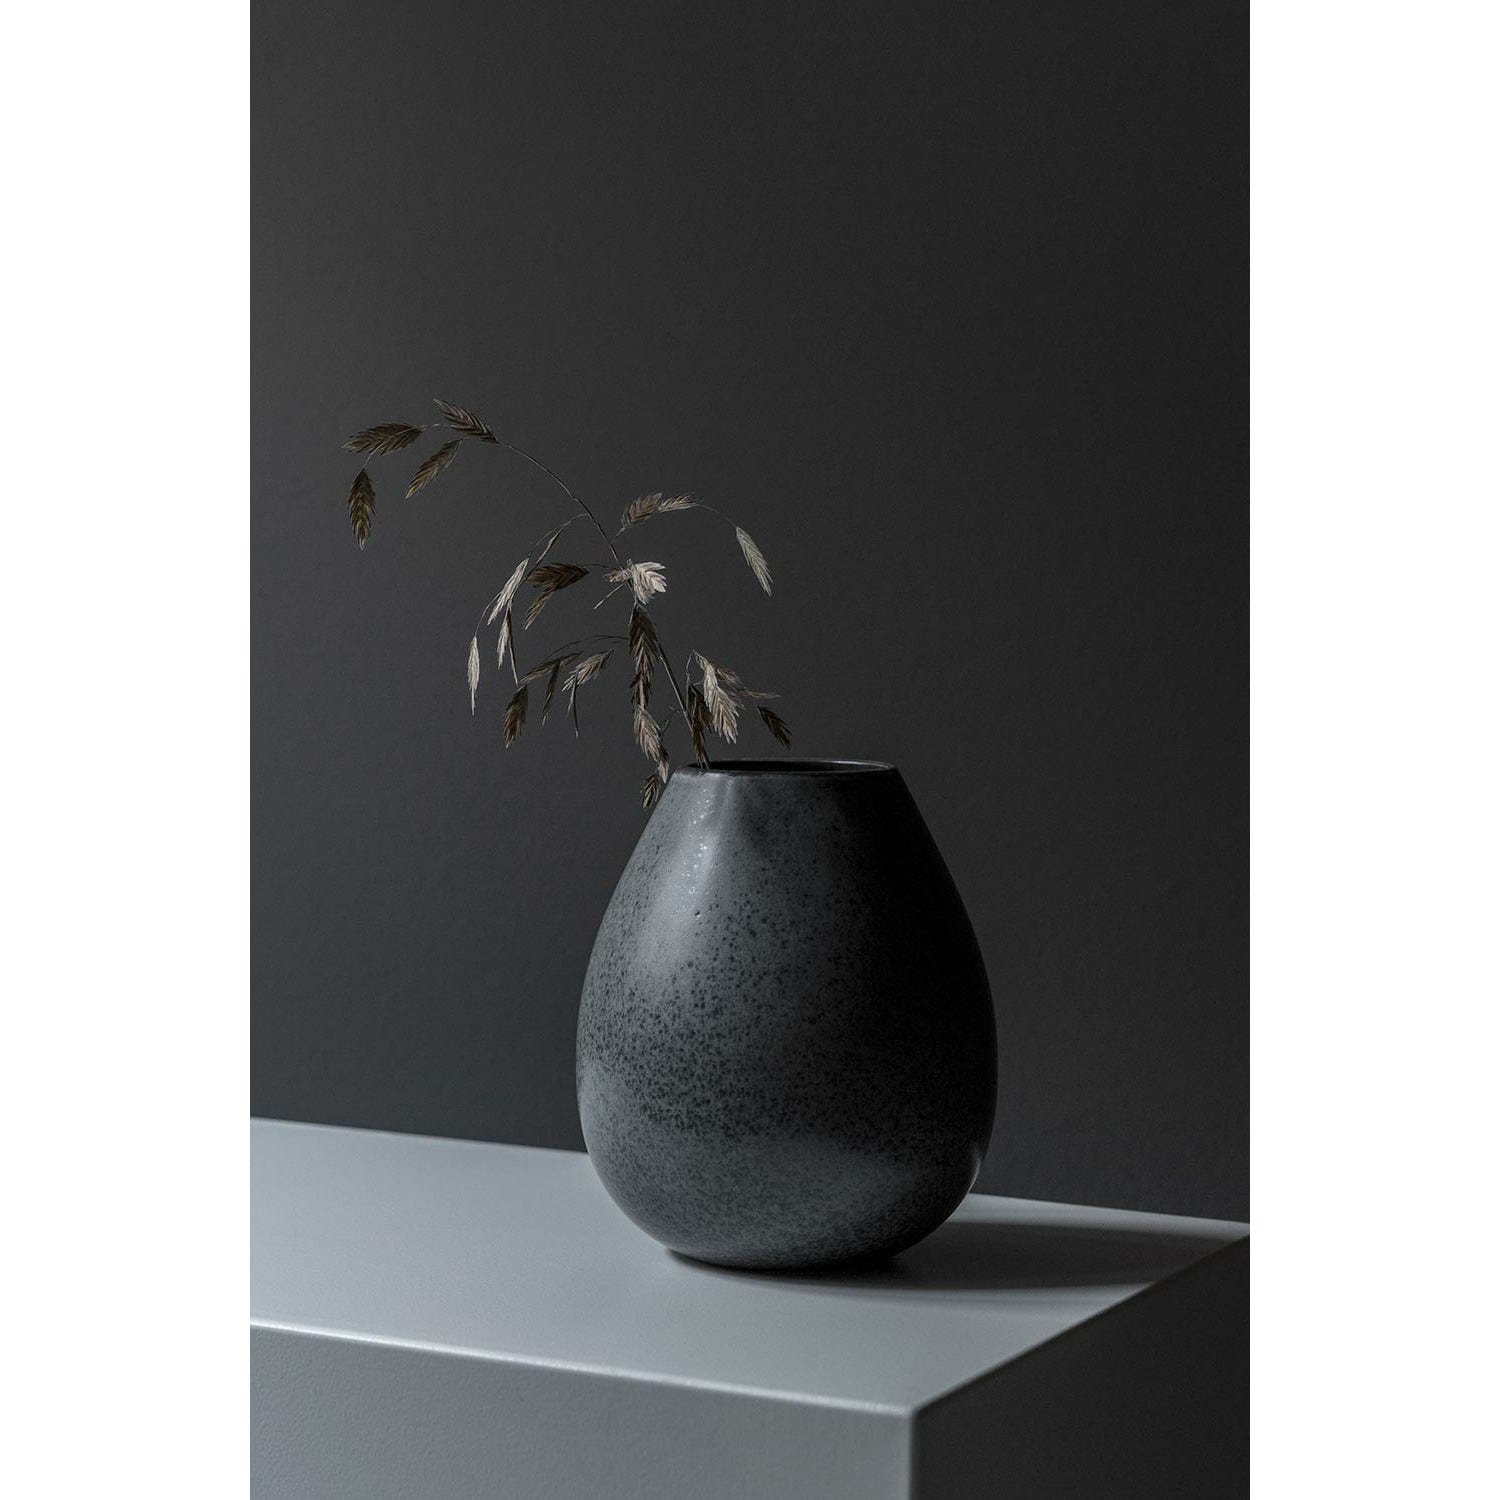 Klassik Studio Vase de drop milo, gris